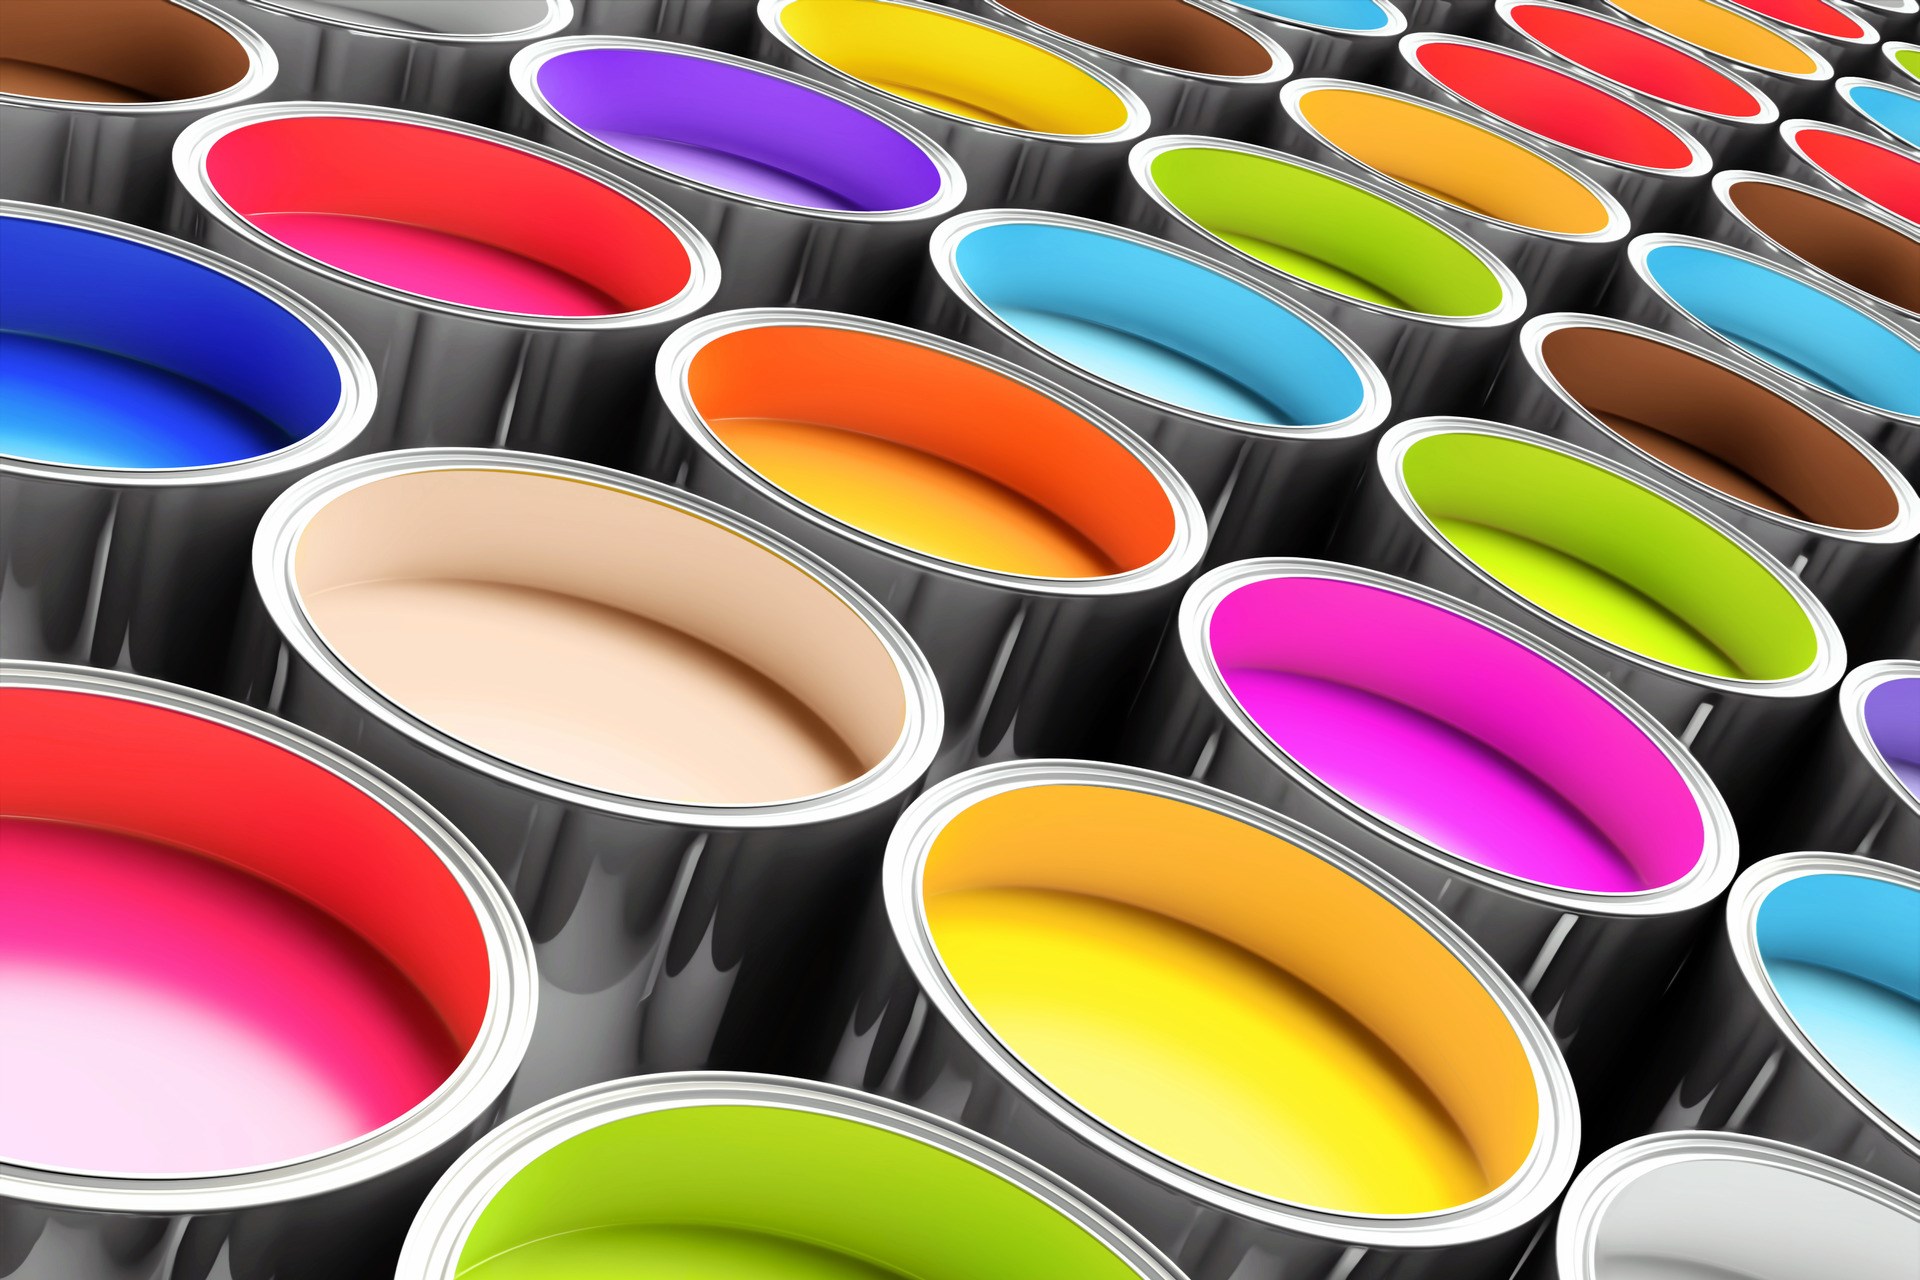 Numerous paint pots filled with different colors

